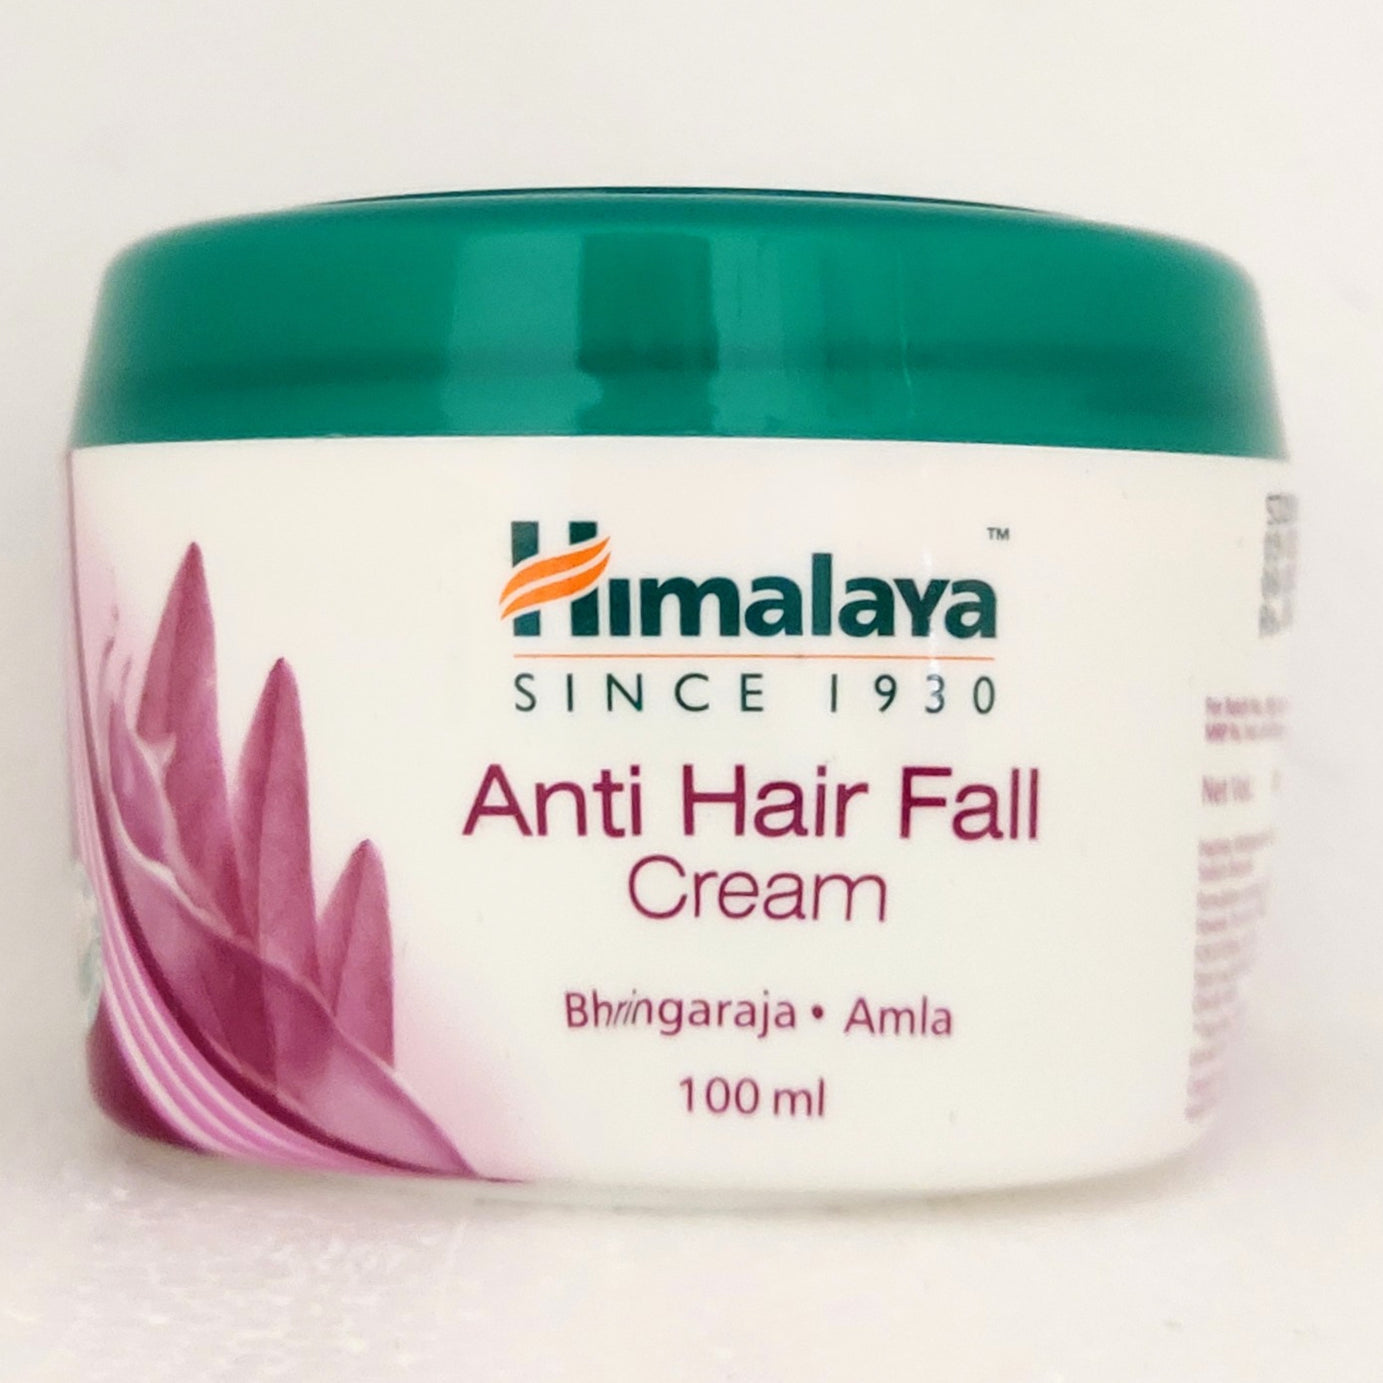 Shop Himalaya anti hairfall cream 100ml at price 80.00 from Himalaya Online - Ayush Care